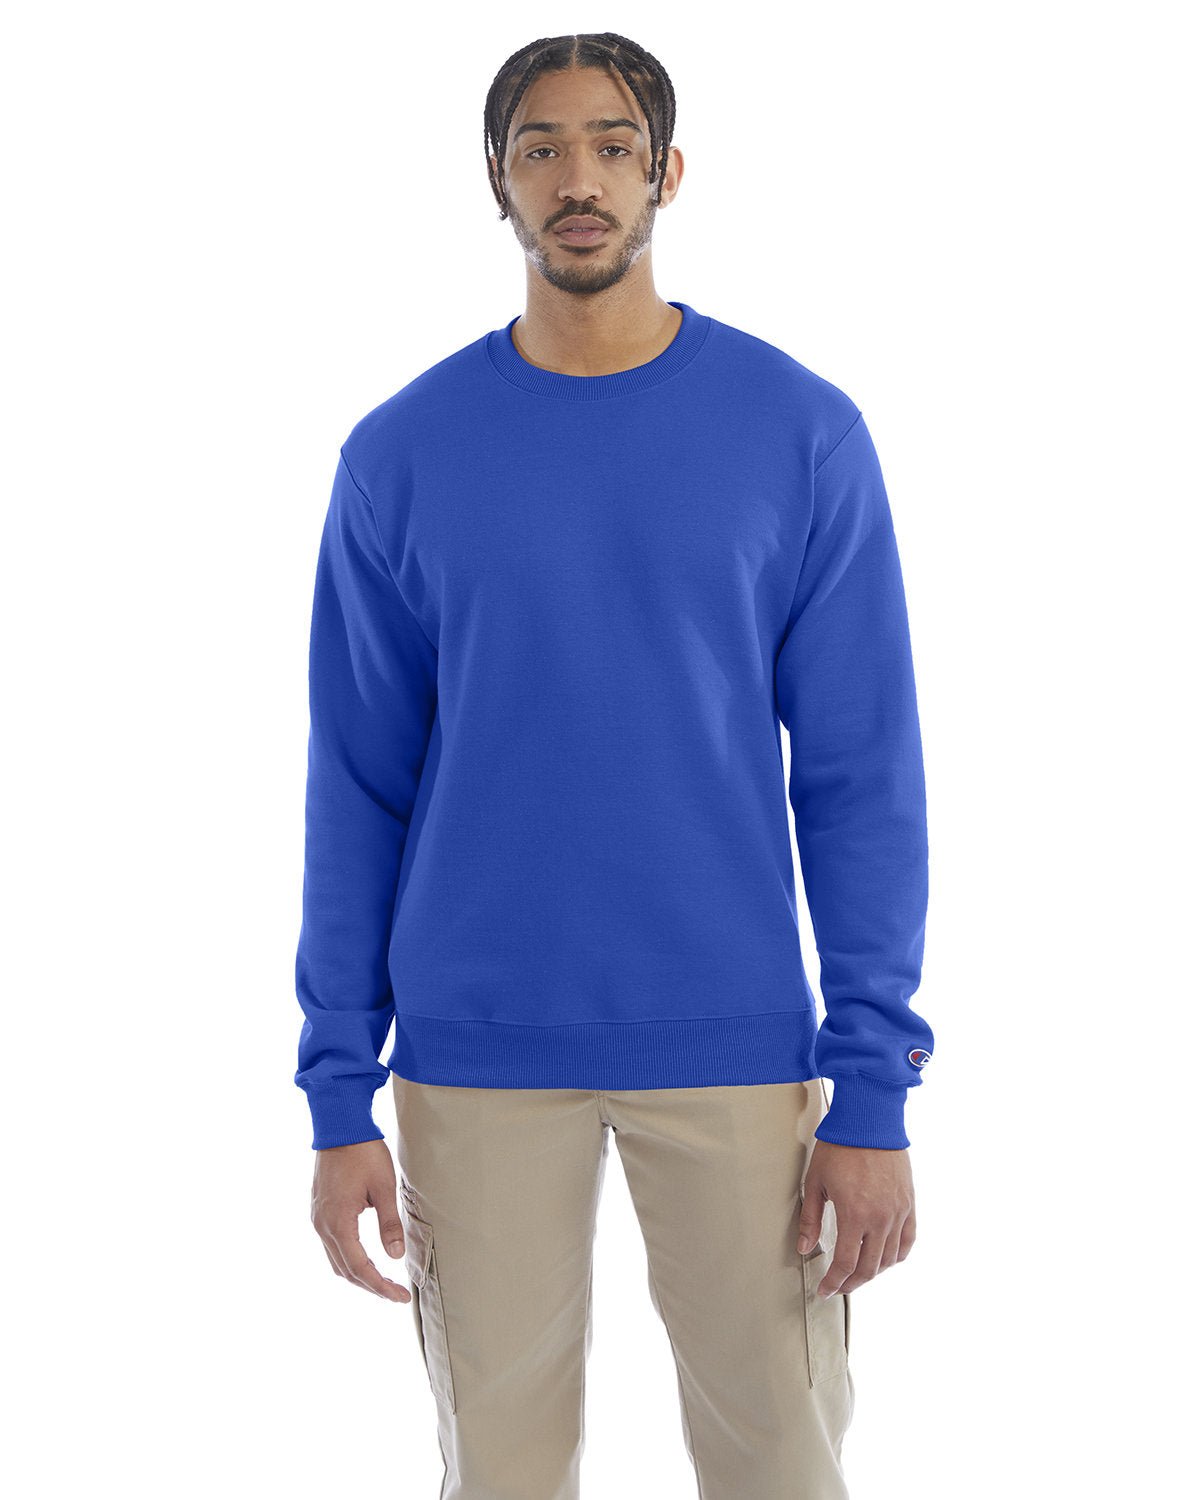 S600-Champion-ROYAL BLUE-Champion-Sweatshirts-1